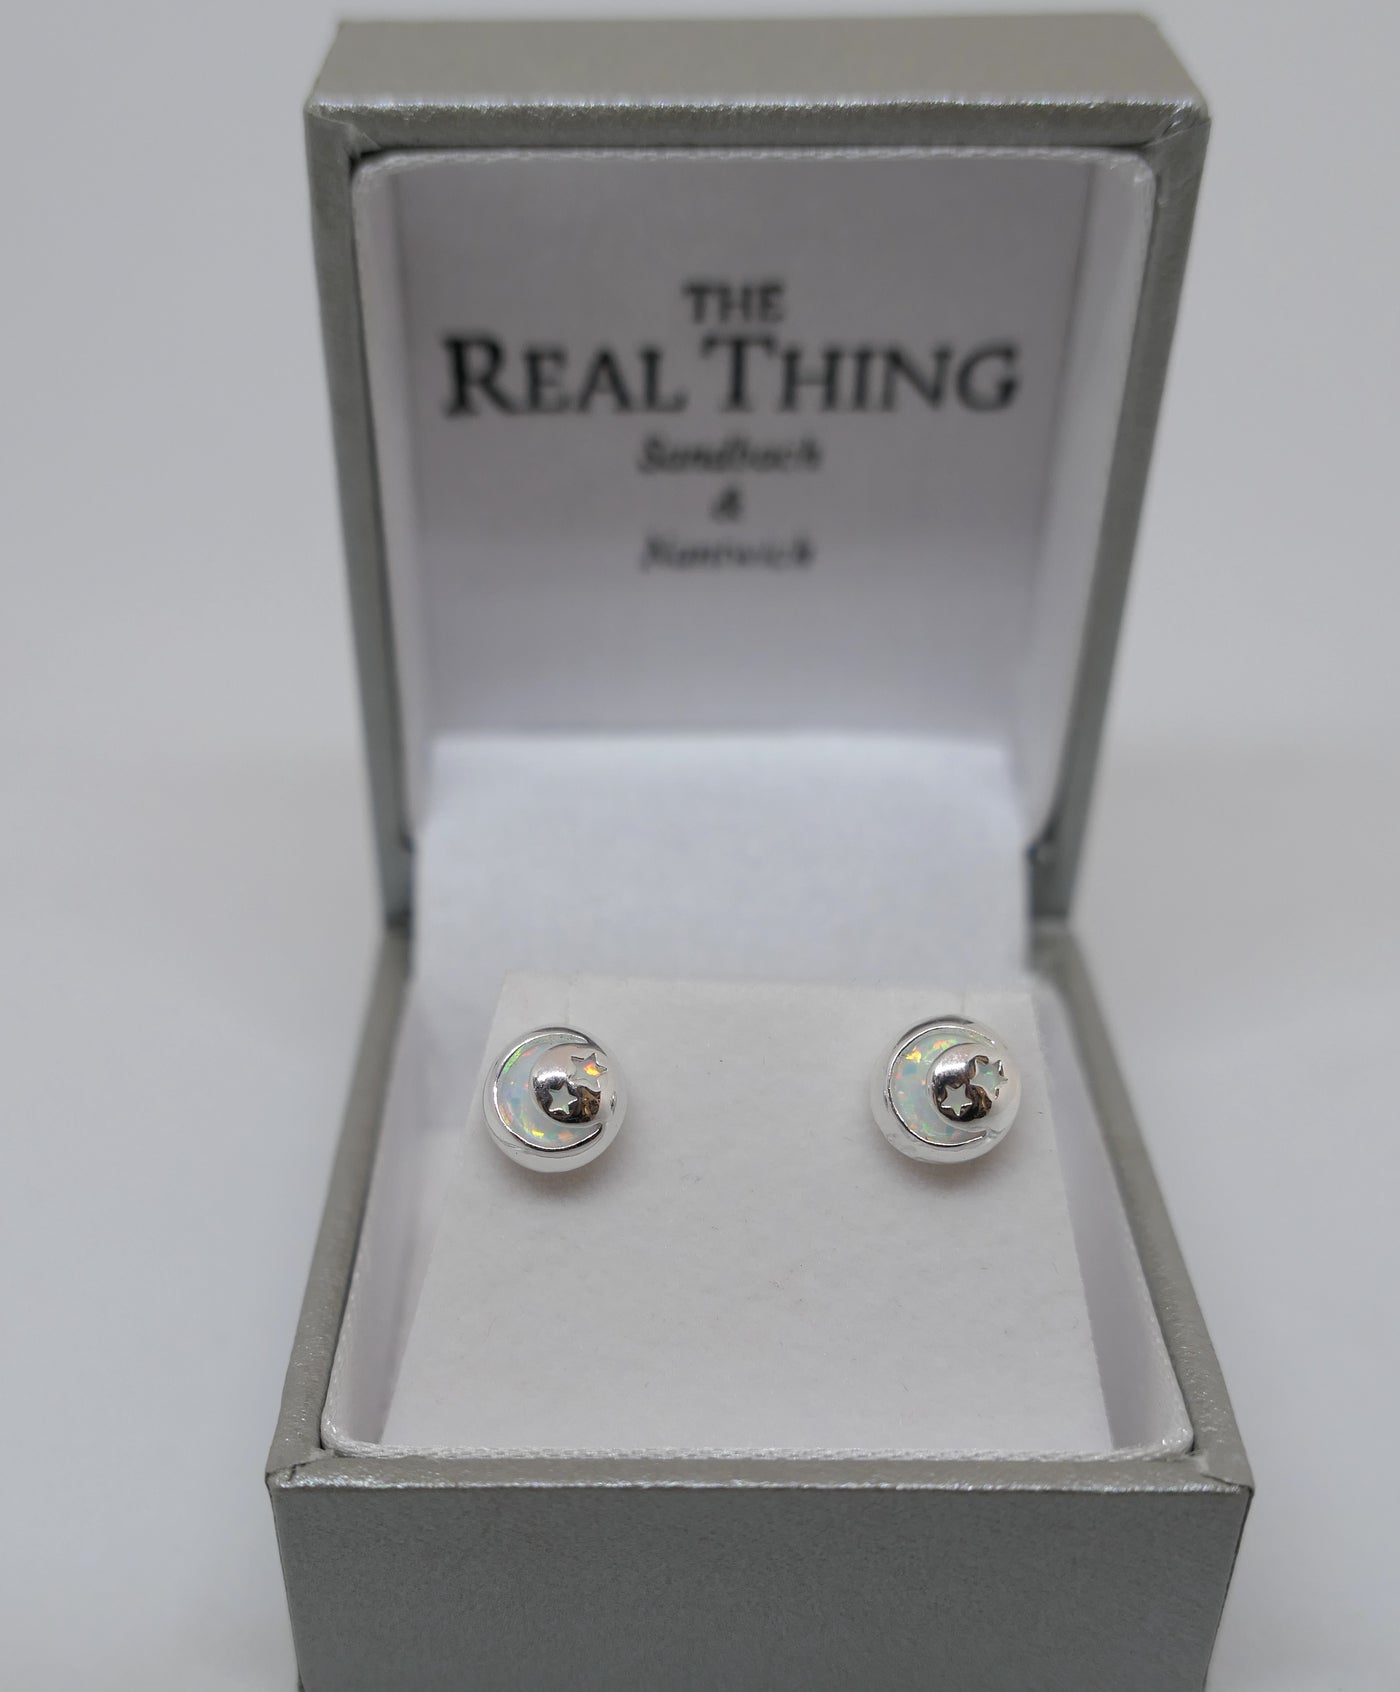 White Opal Moon & Star Dome Stud Earrings